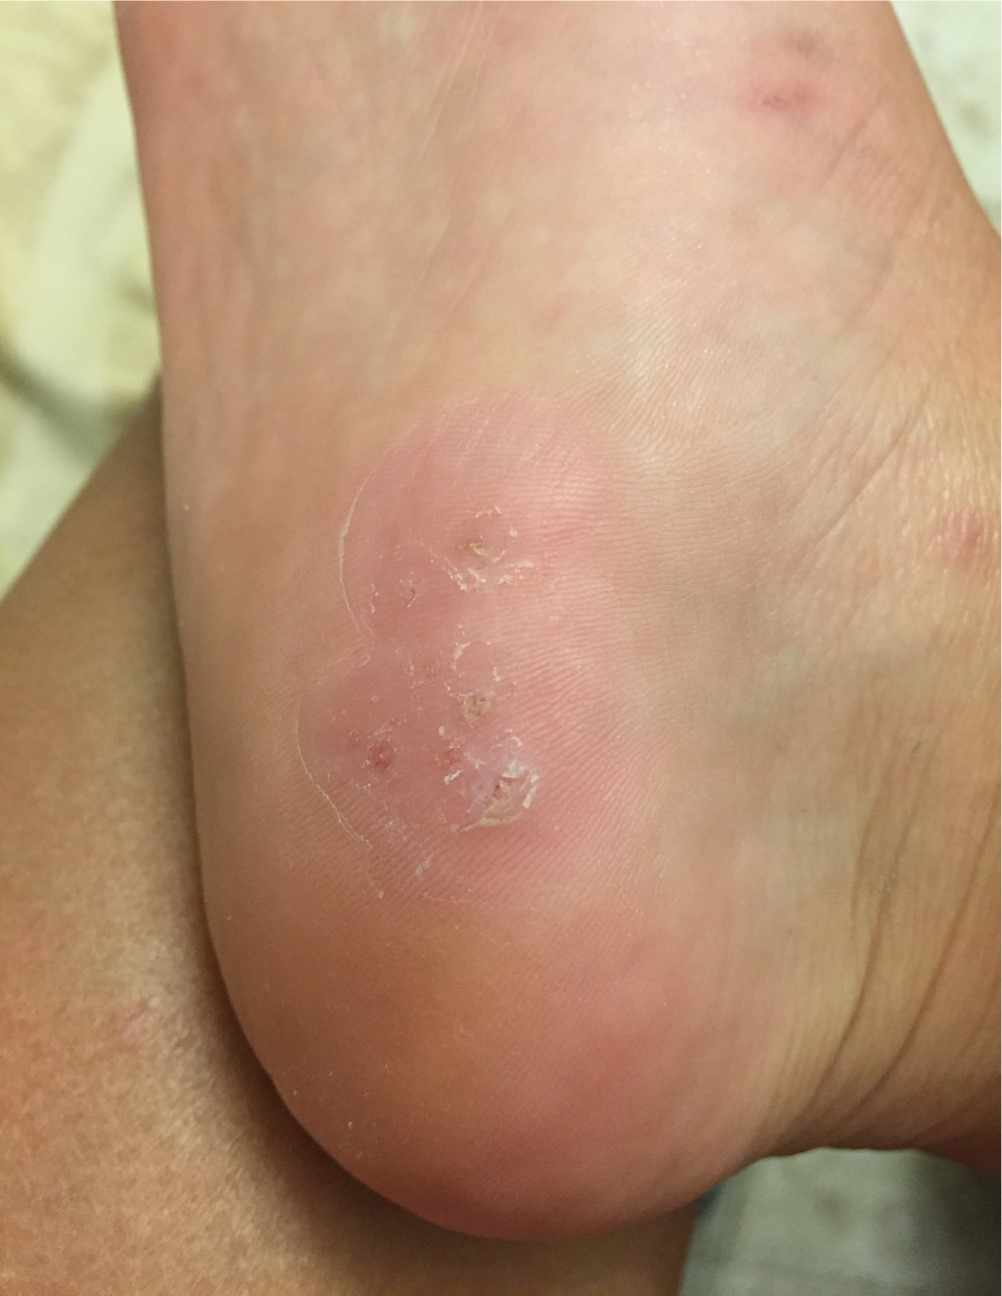 wart on foot healing